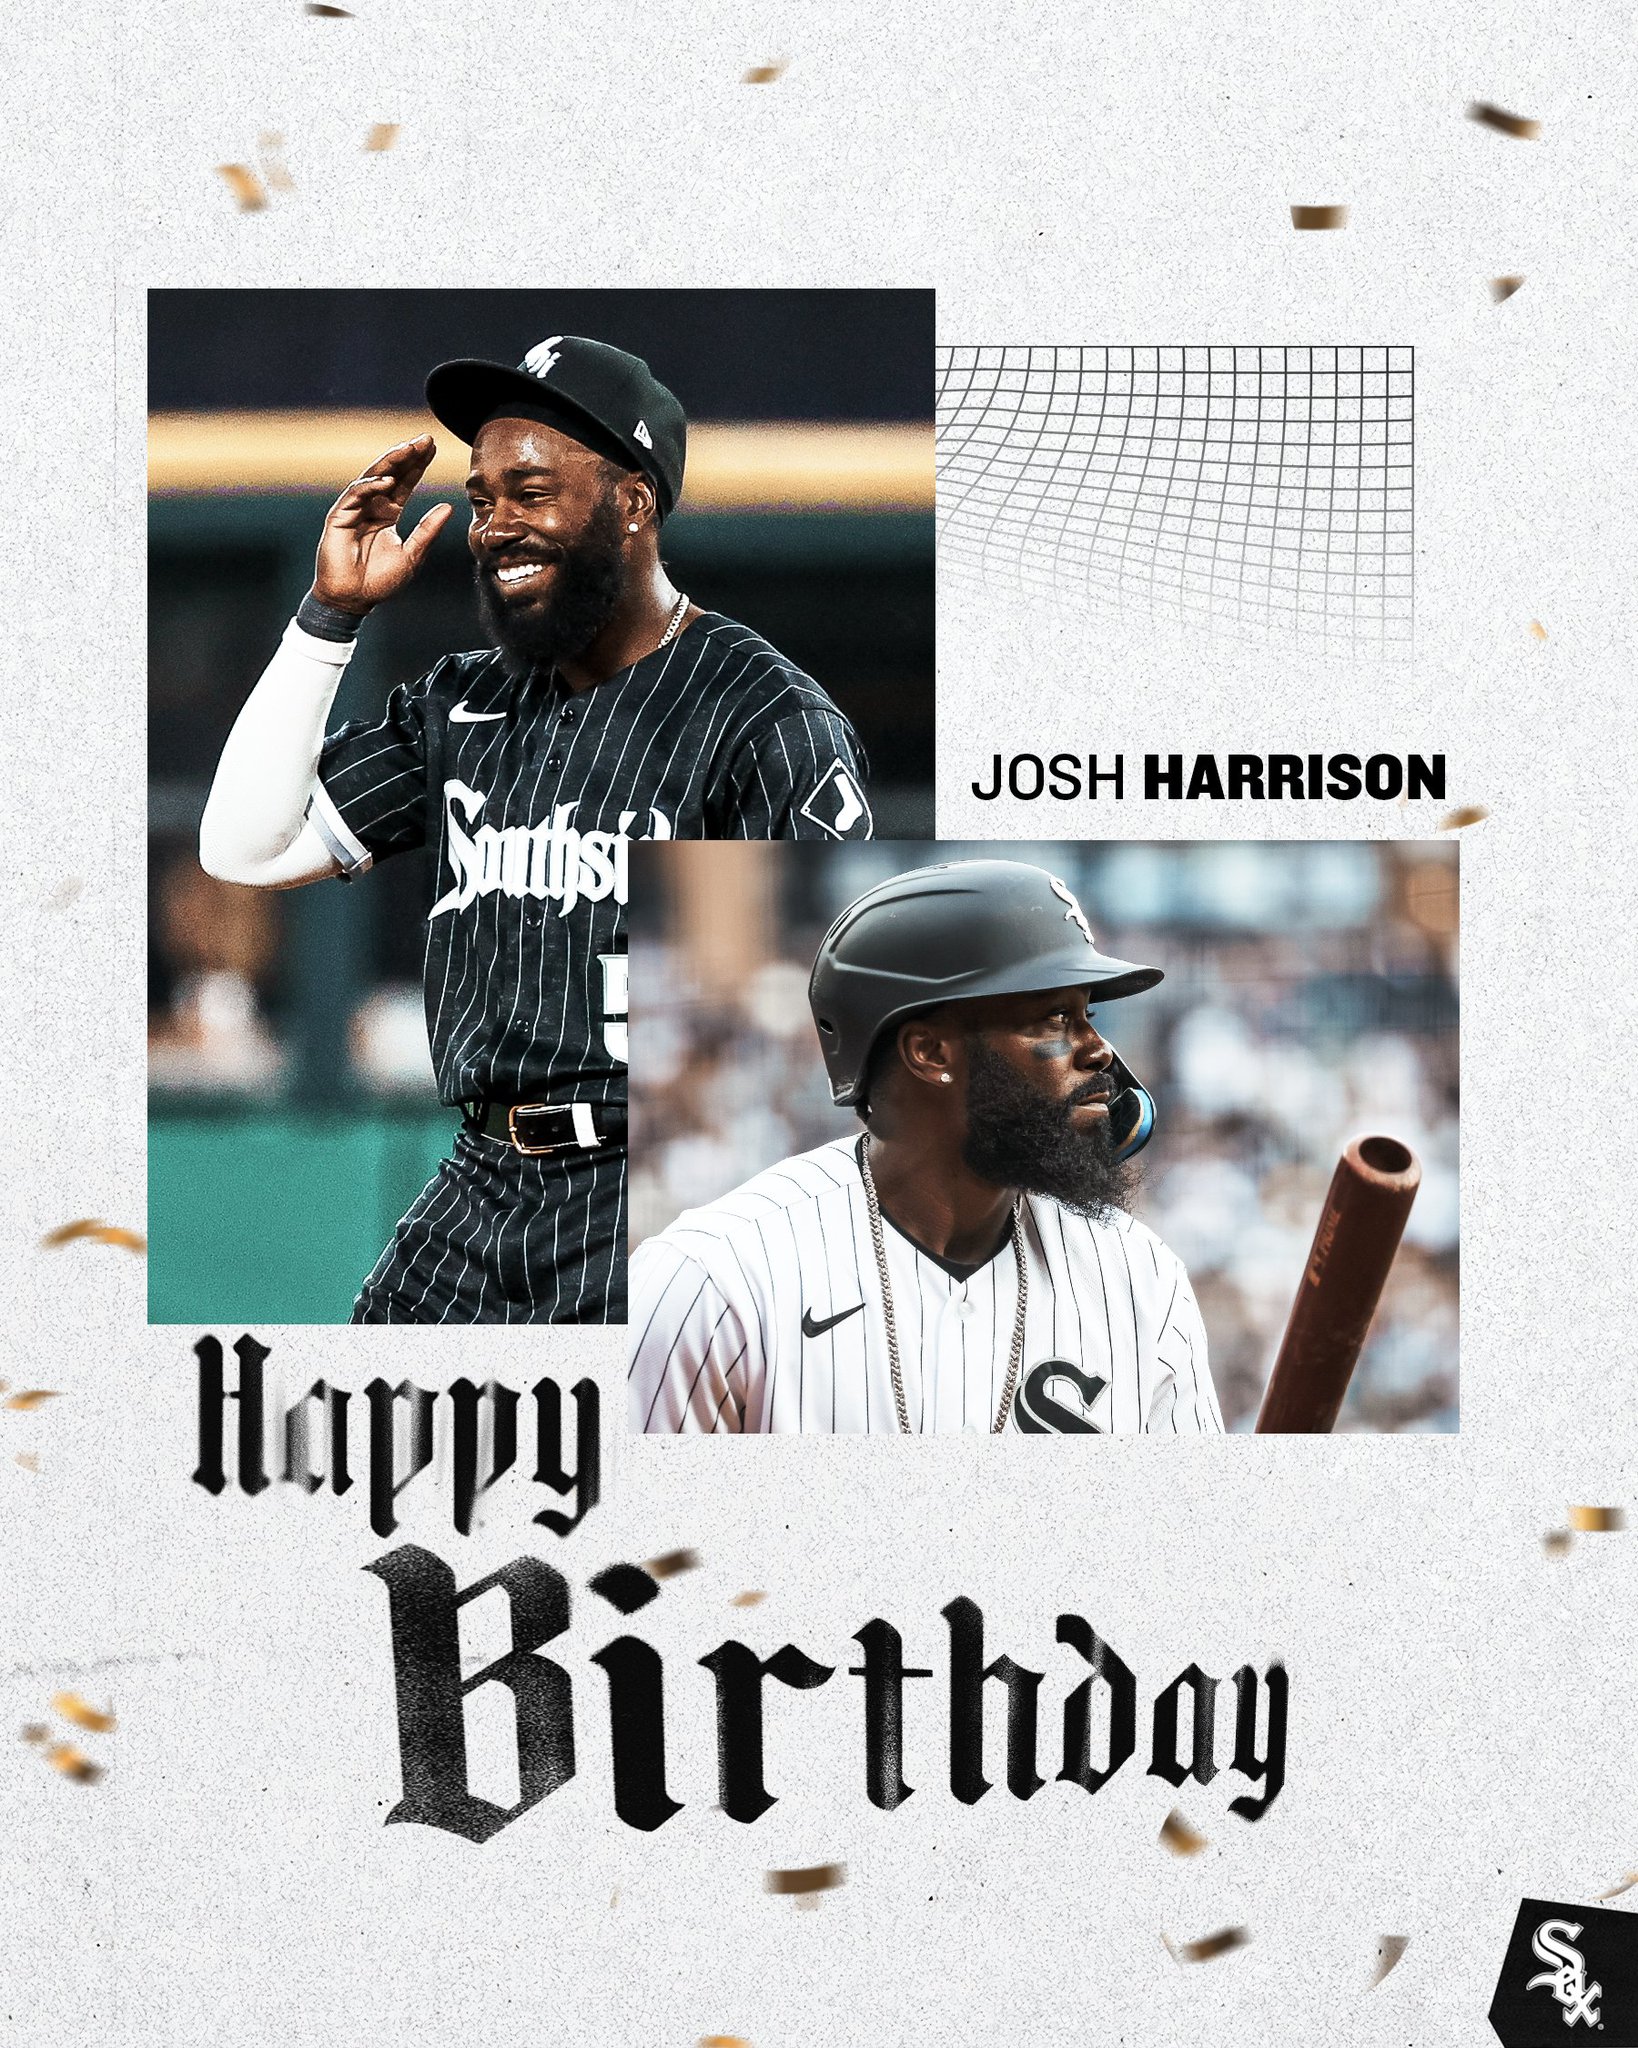 Happy birthday, Josh Harrison! 